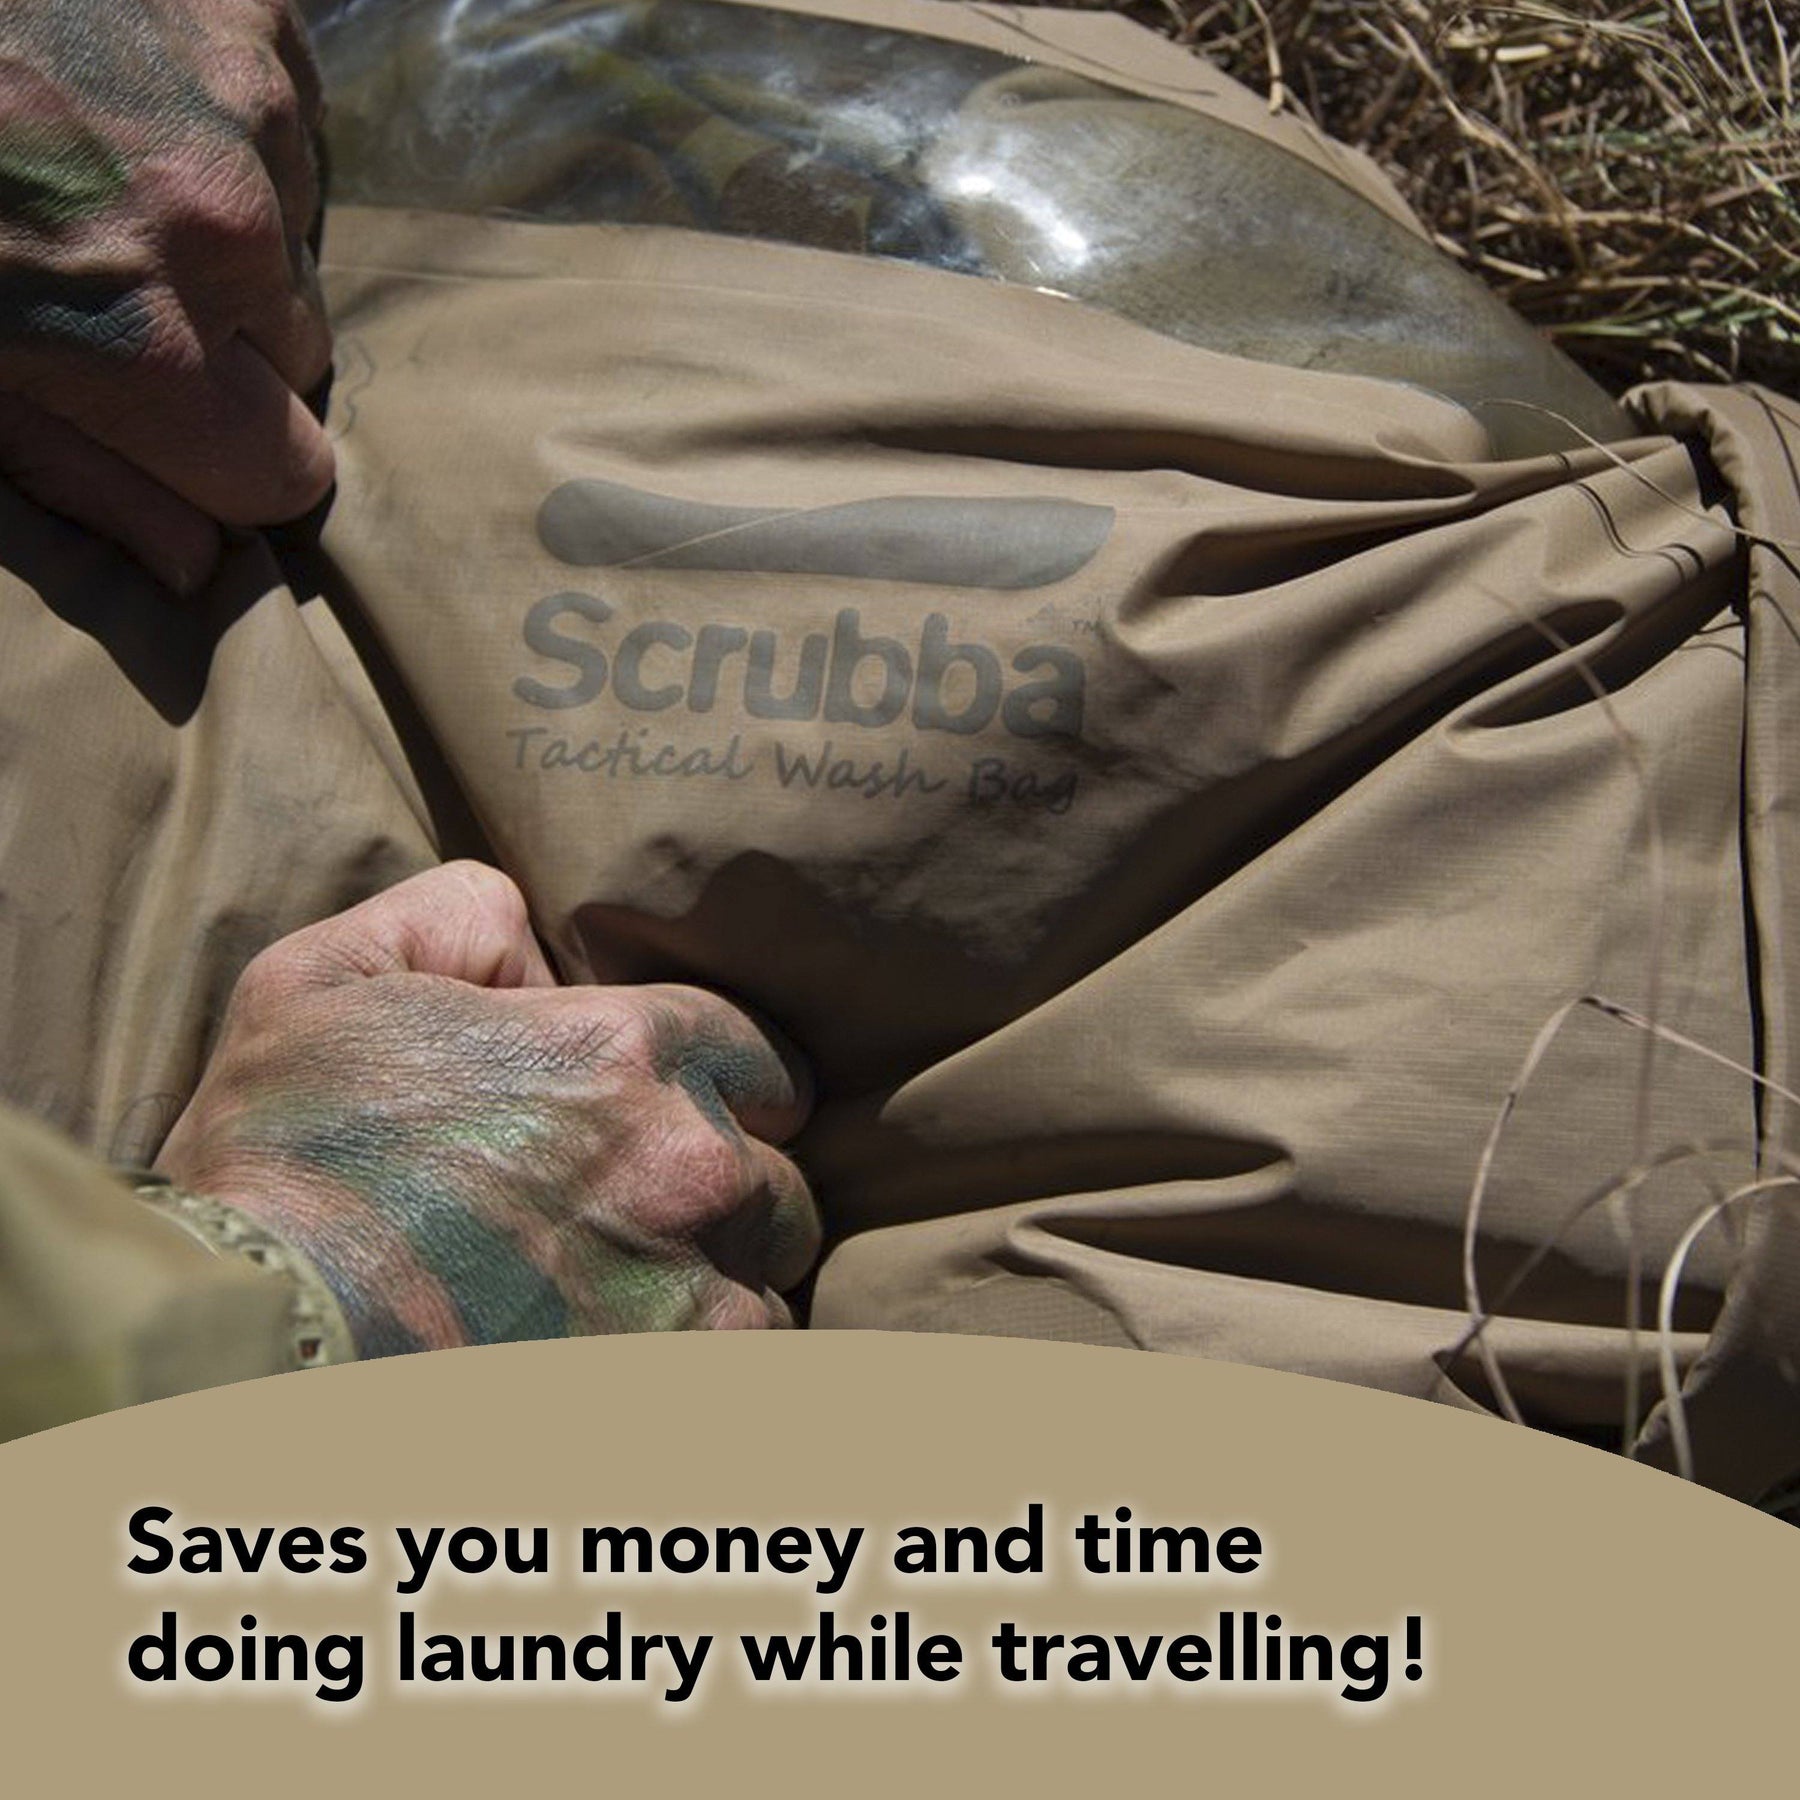 Scrubba Wash Bag Mini - clean jocks and socks! - The Gadgeteer